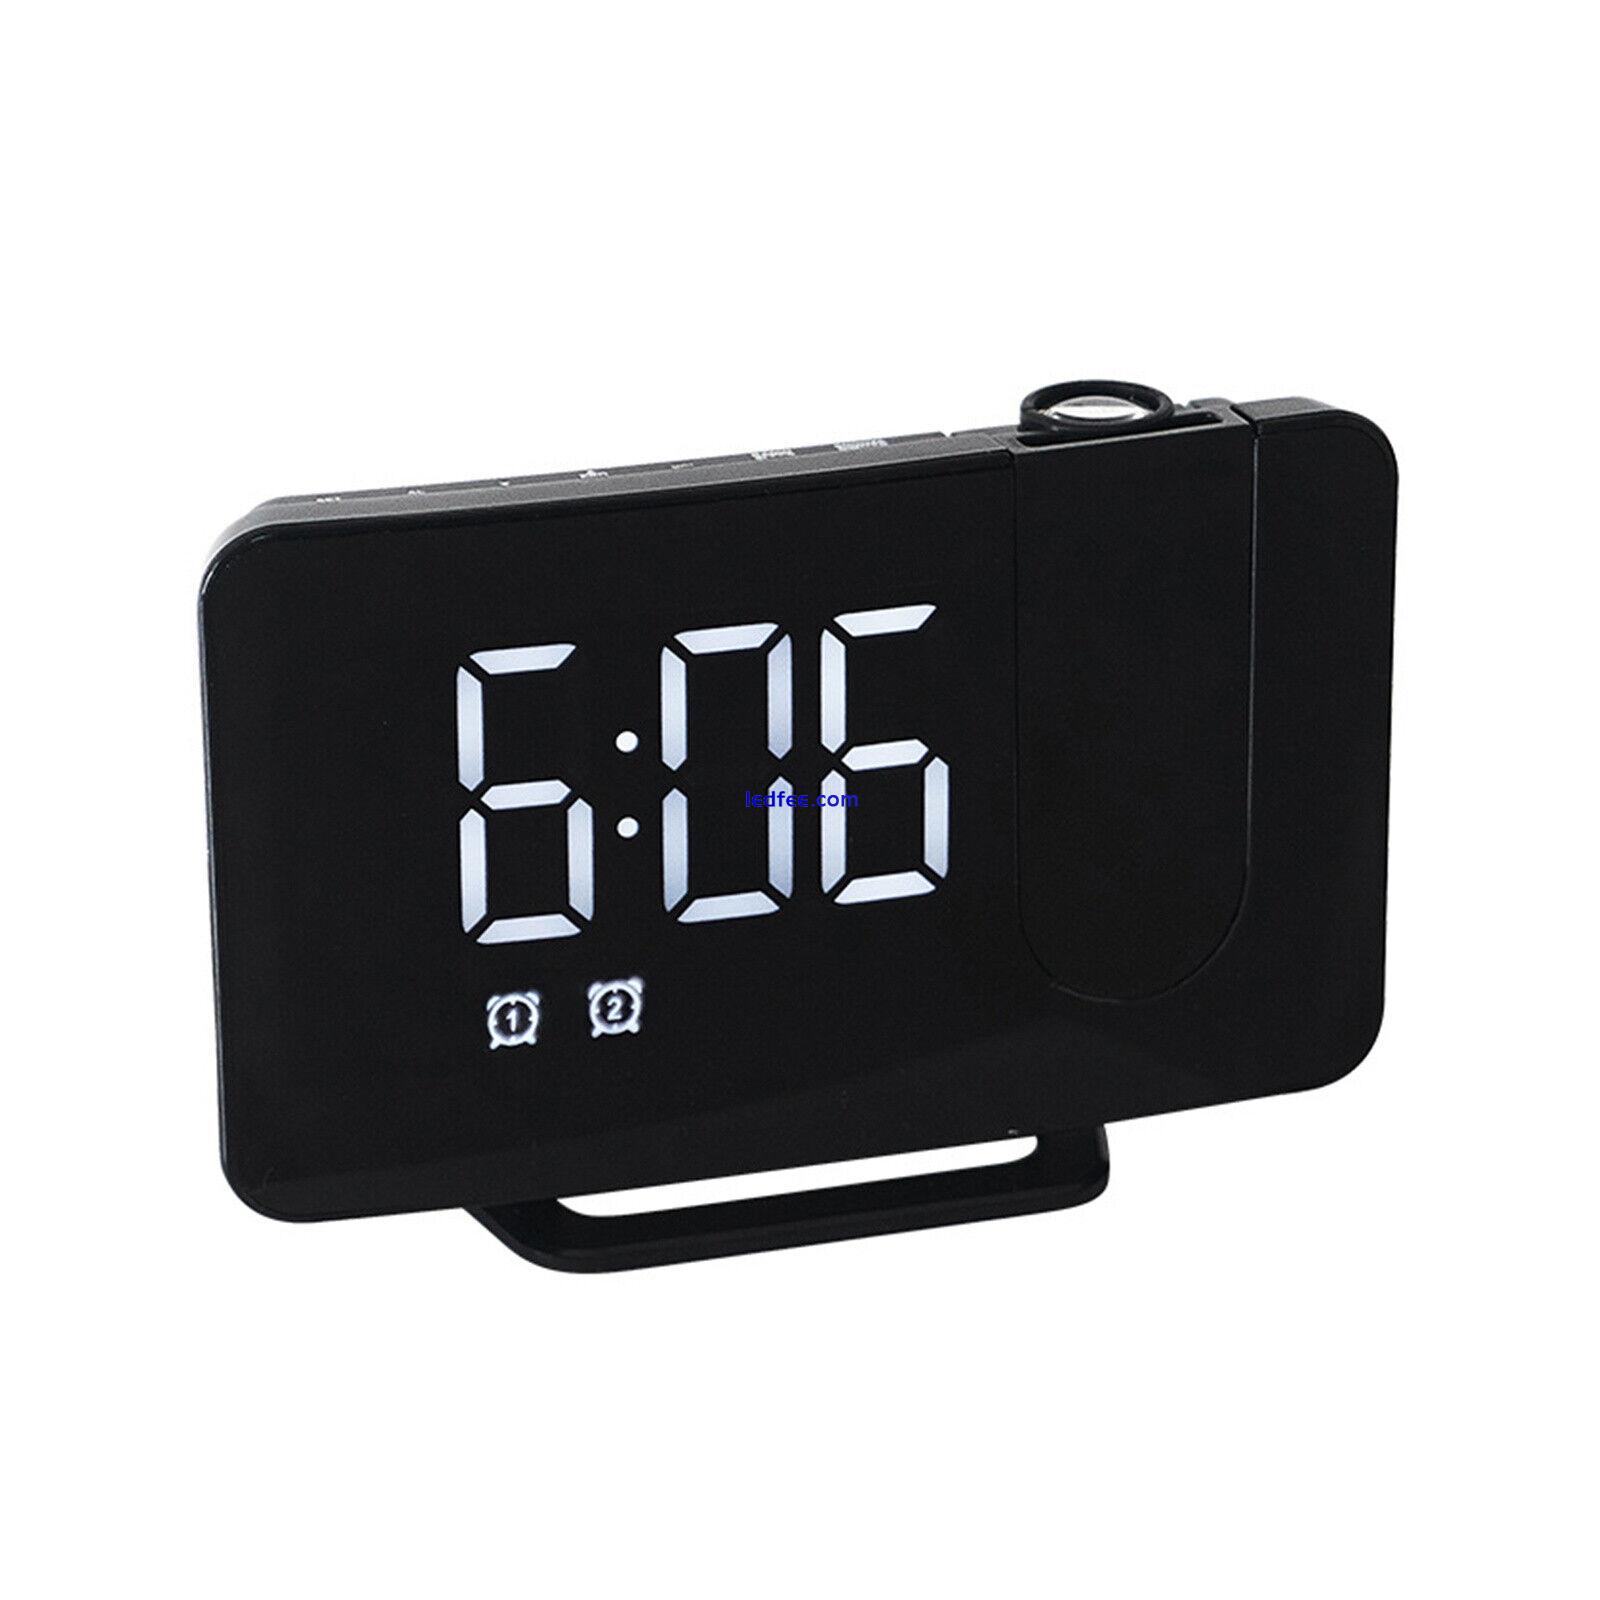 USB Projection Alarm Clock Snooze Digital LED Display Dual Alarm Clock FM Radio 5 